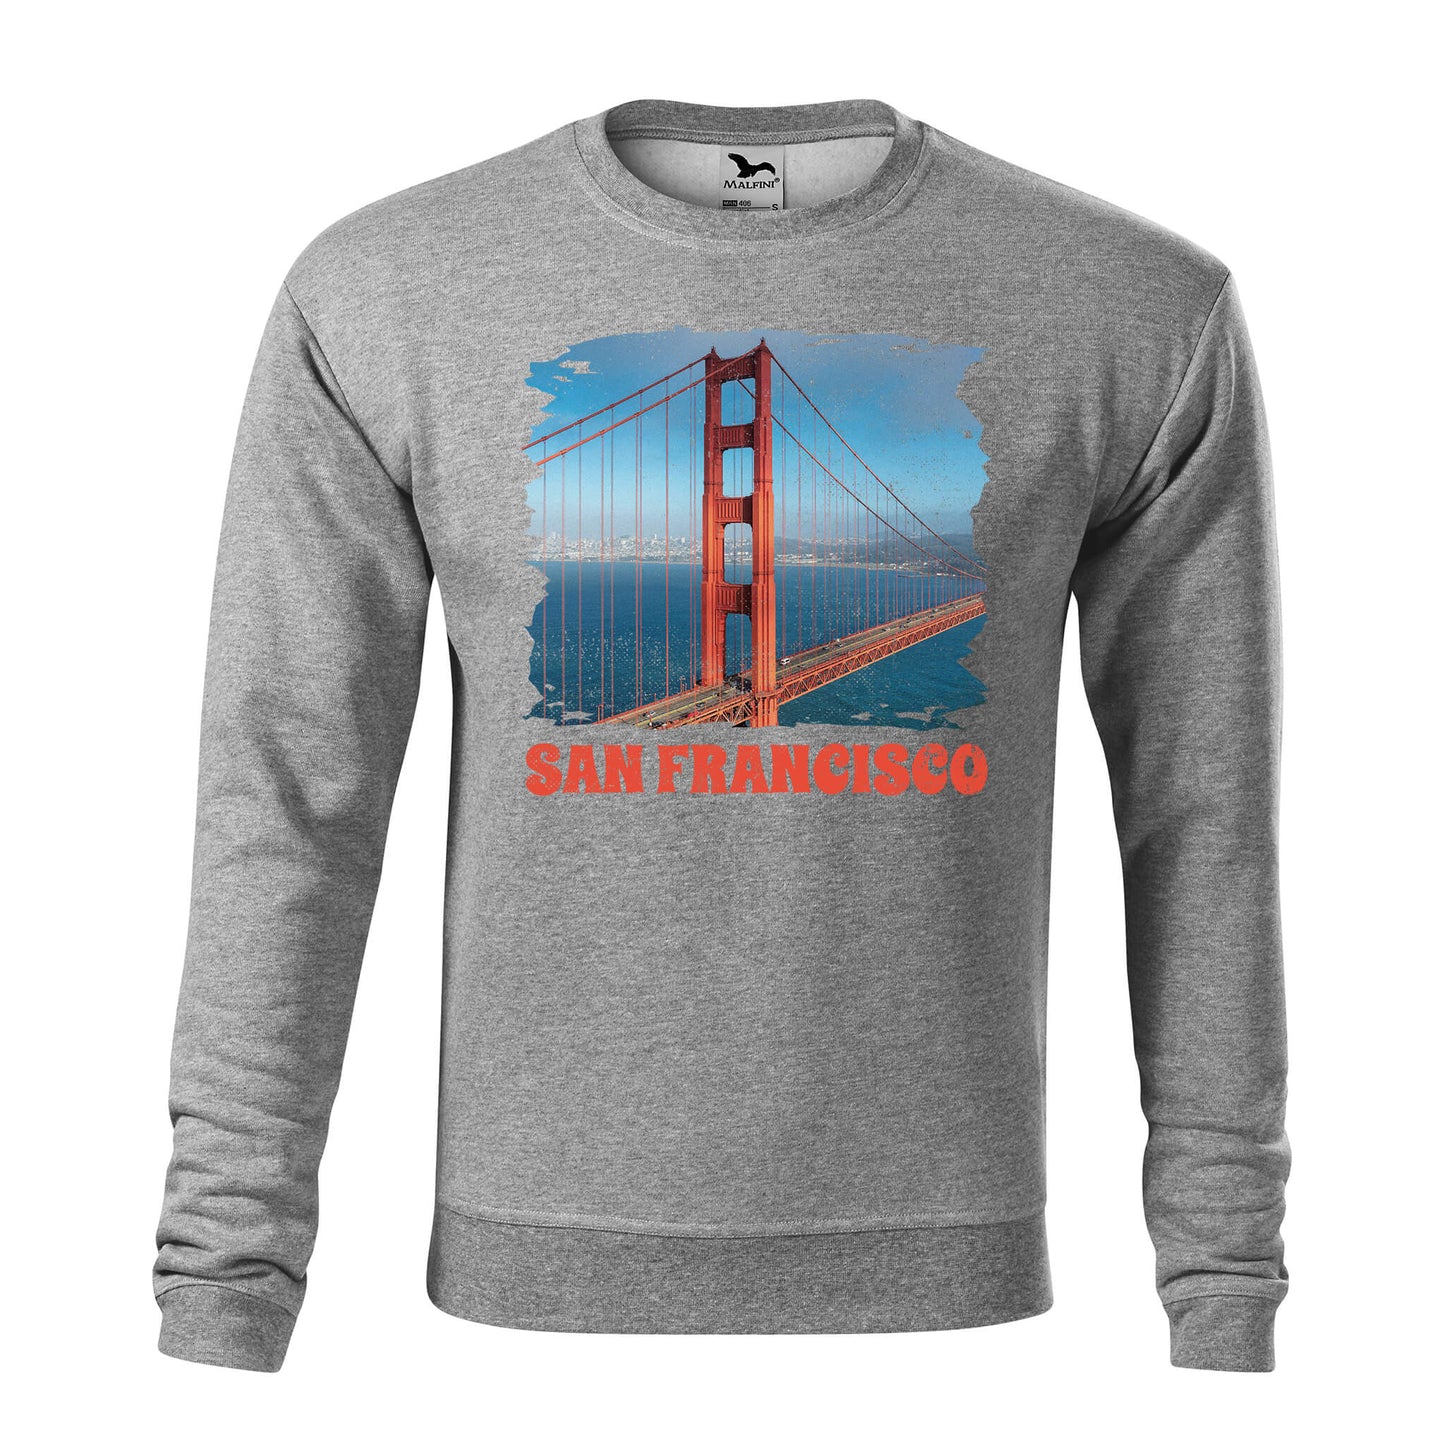 San Francisco sweatshirt - mens